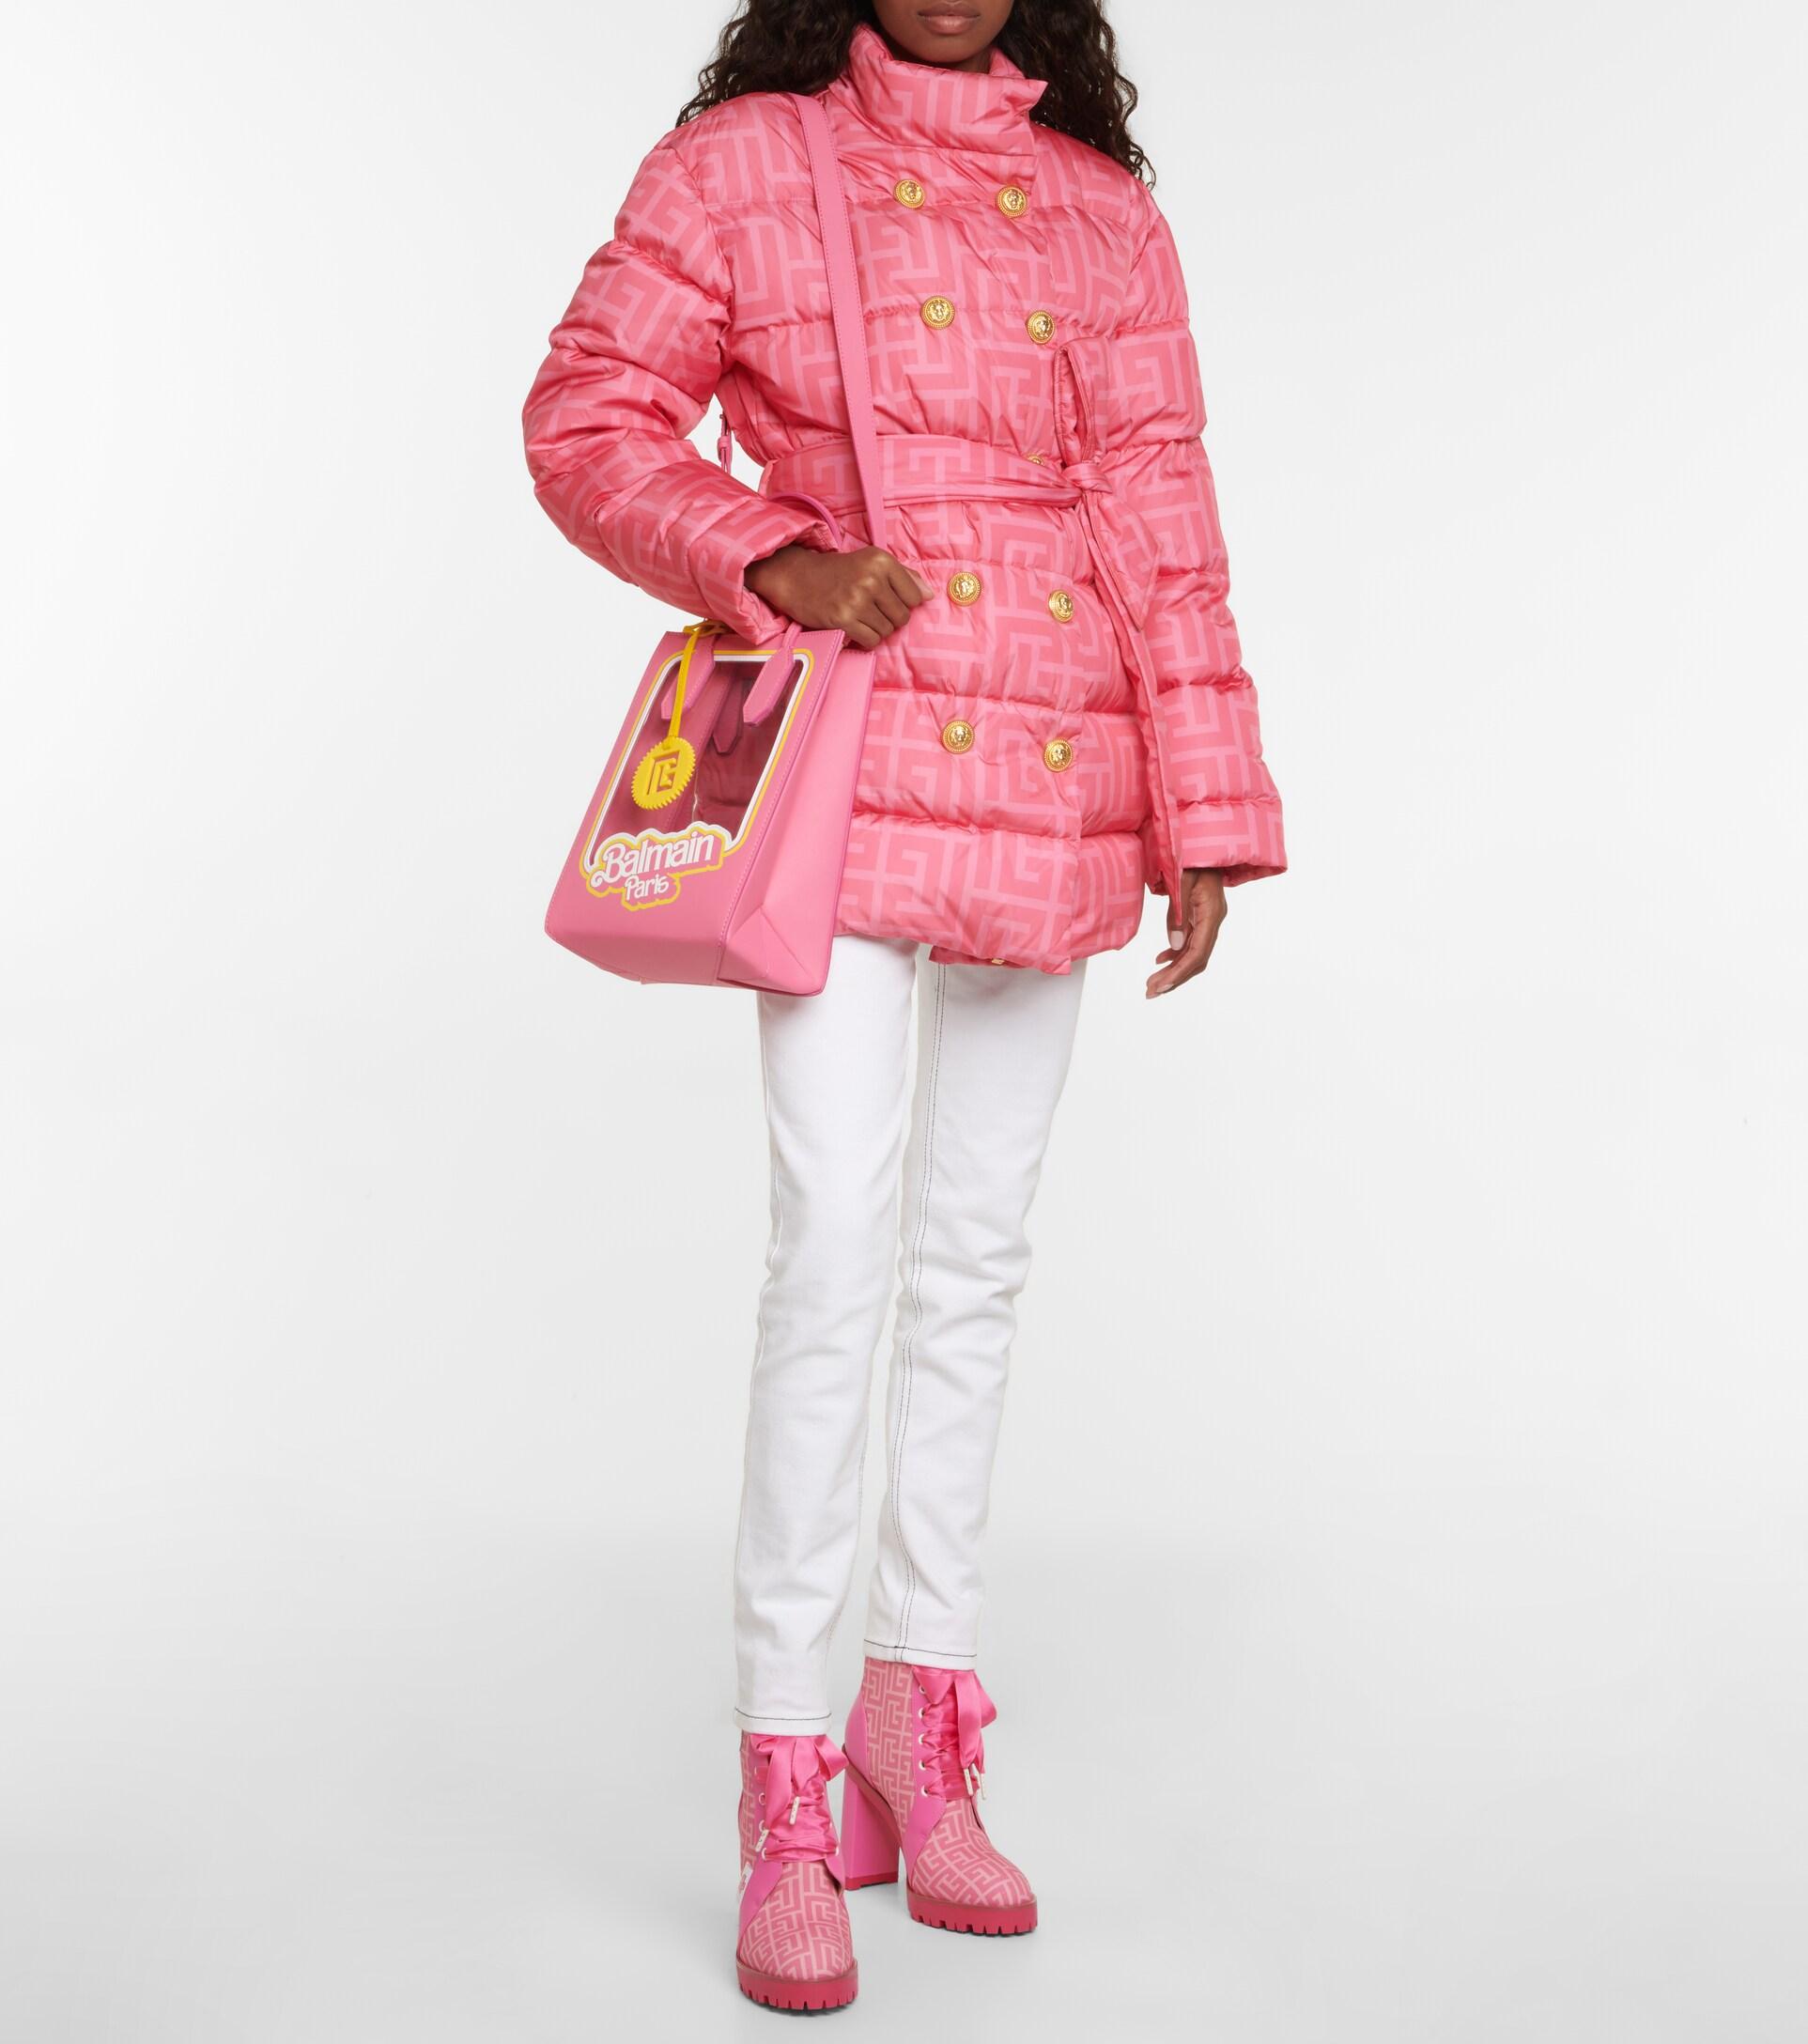 Balmain Pvc Shopping Bag in Pink